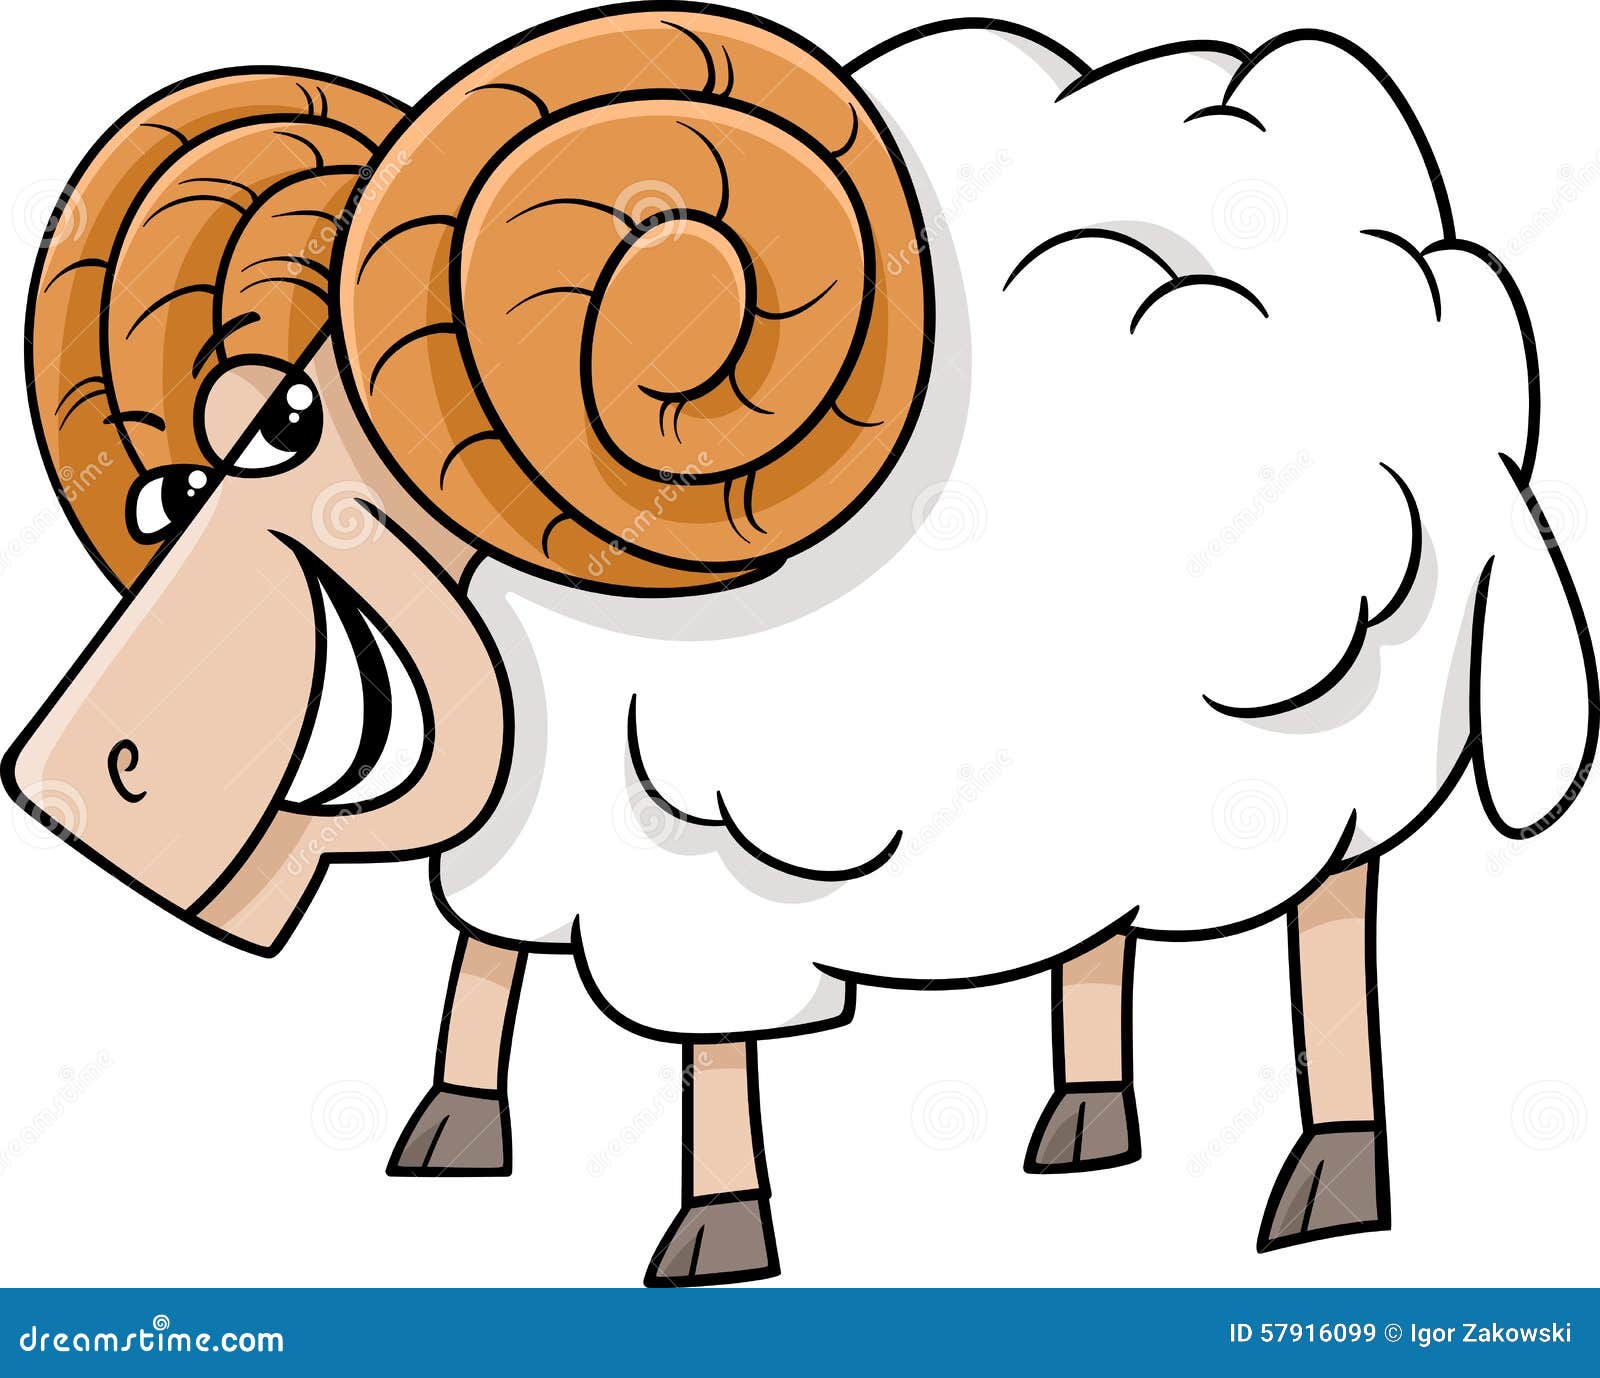 Ram farm animal cartoon stock vector. Illustration of smile - 57916099